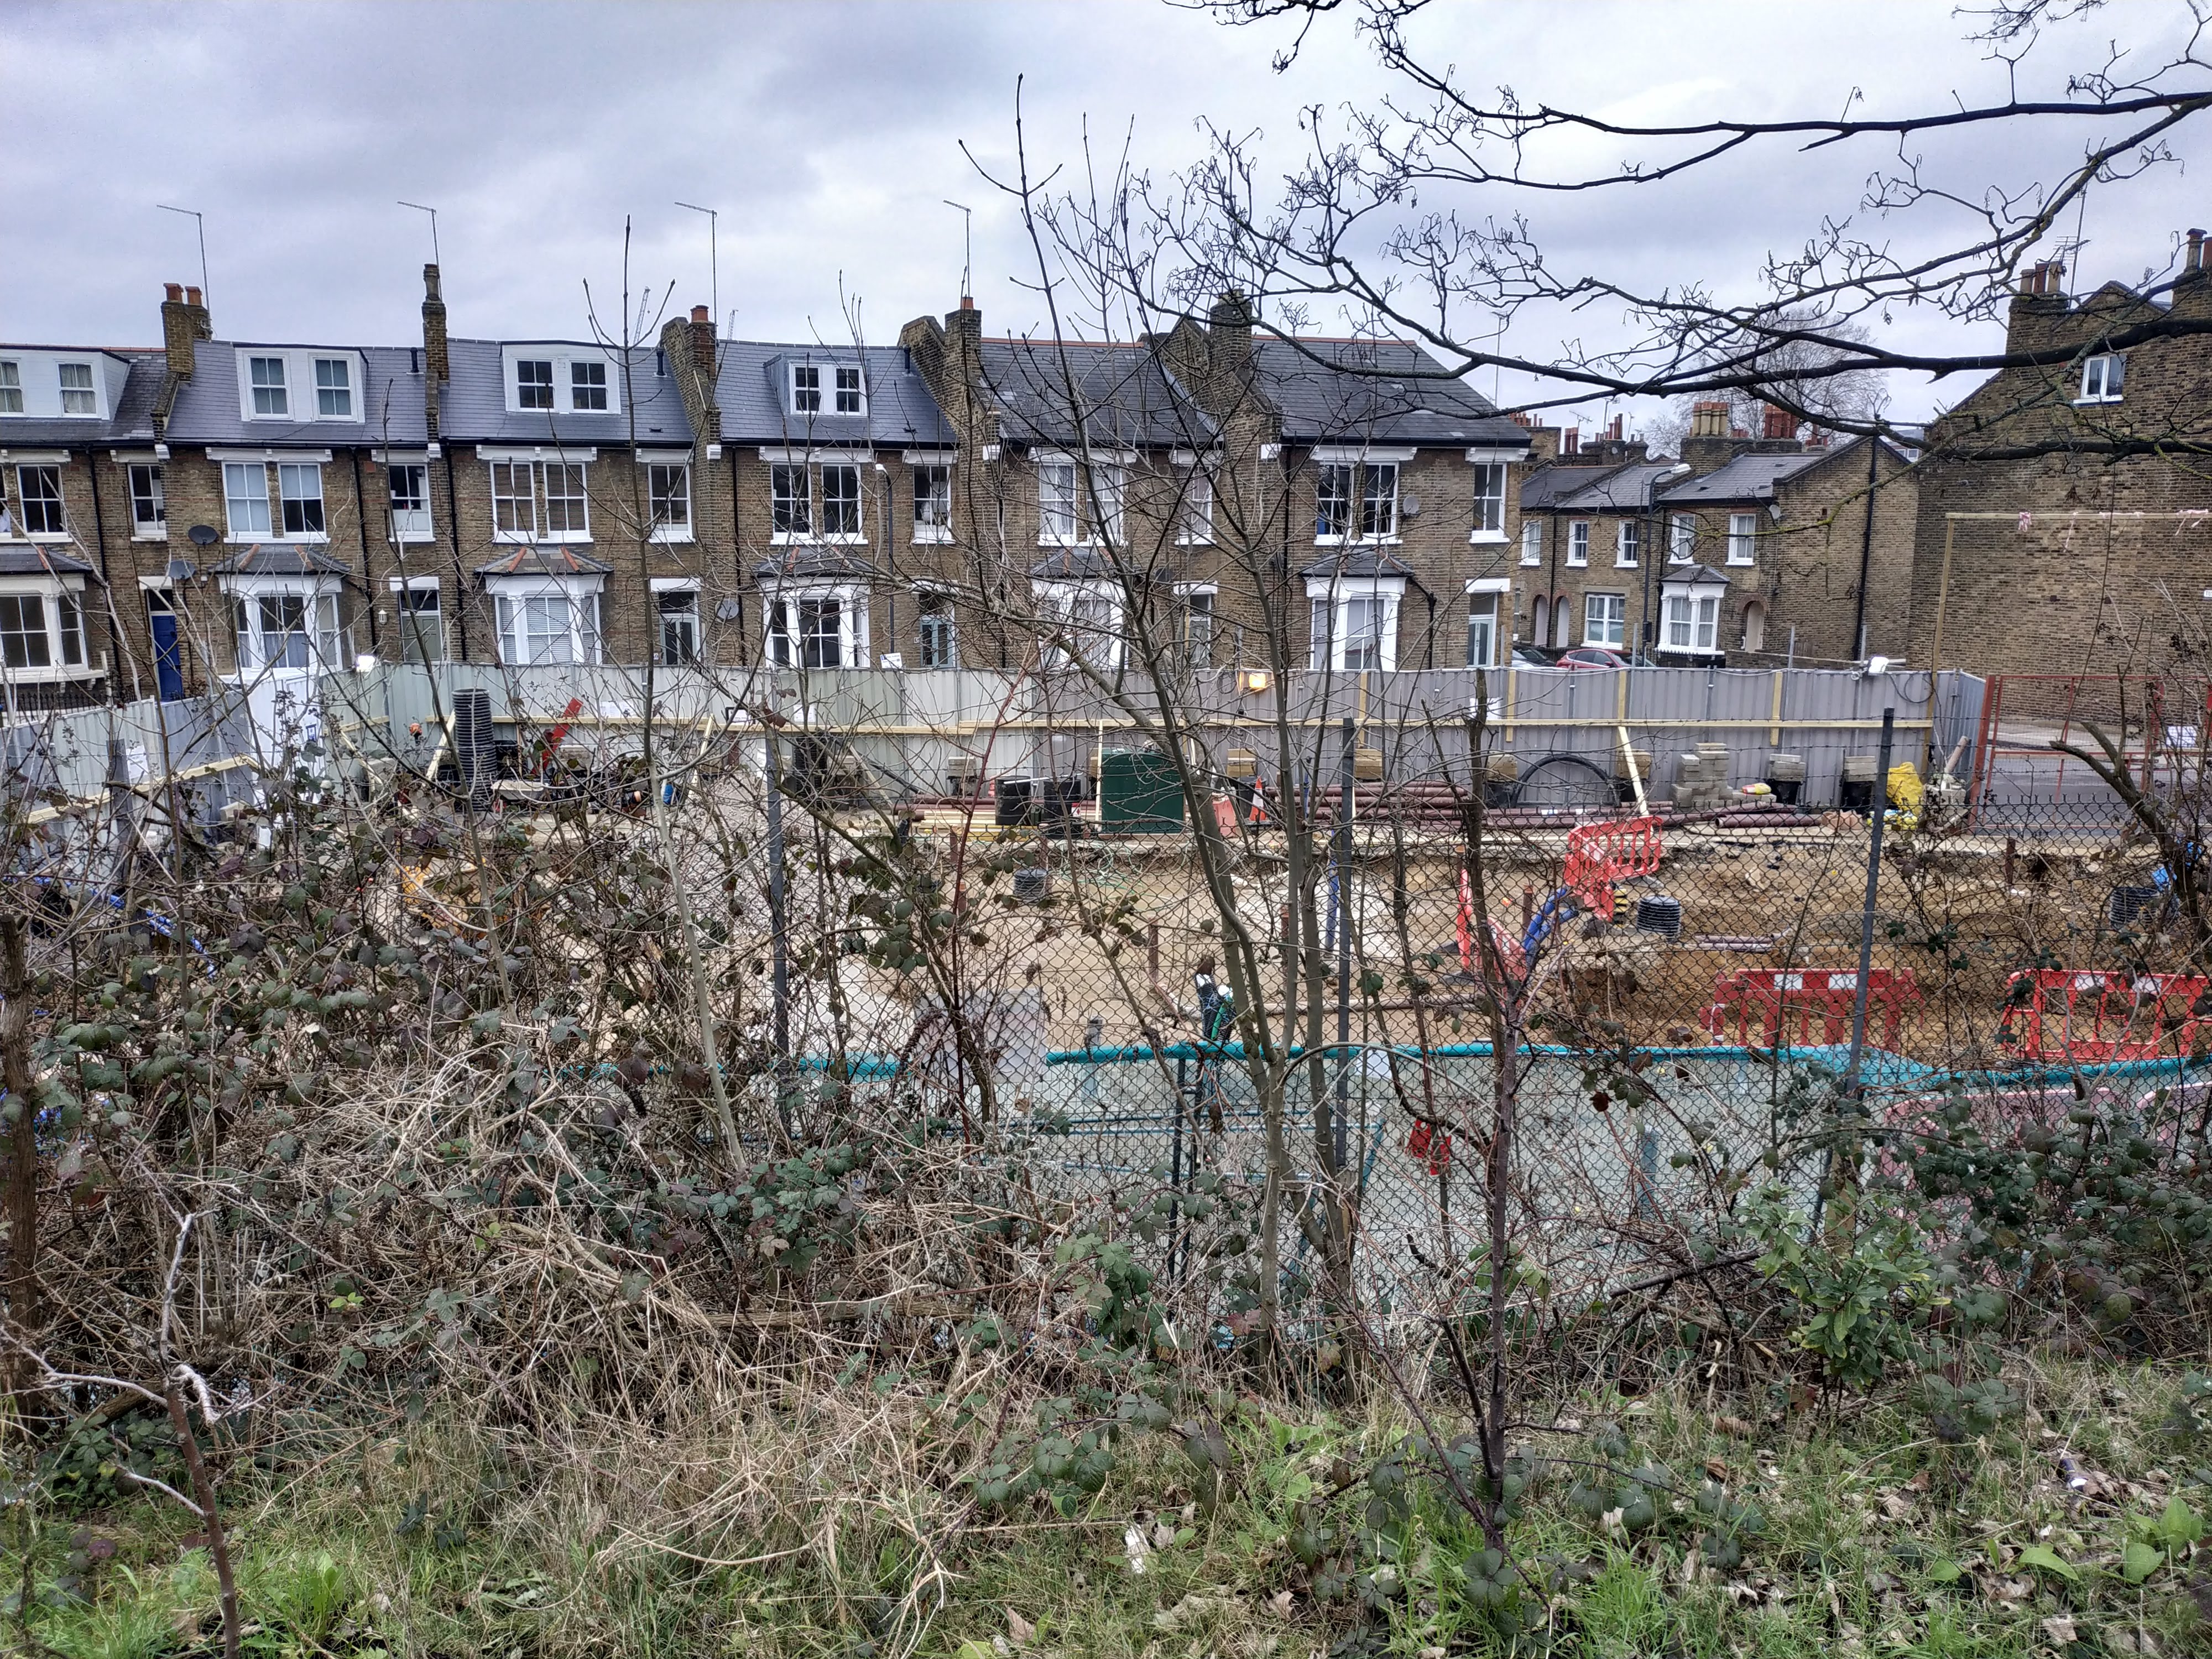 construction-on-greenwich-council-housing-underway-murky-depths